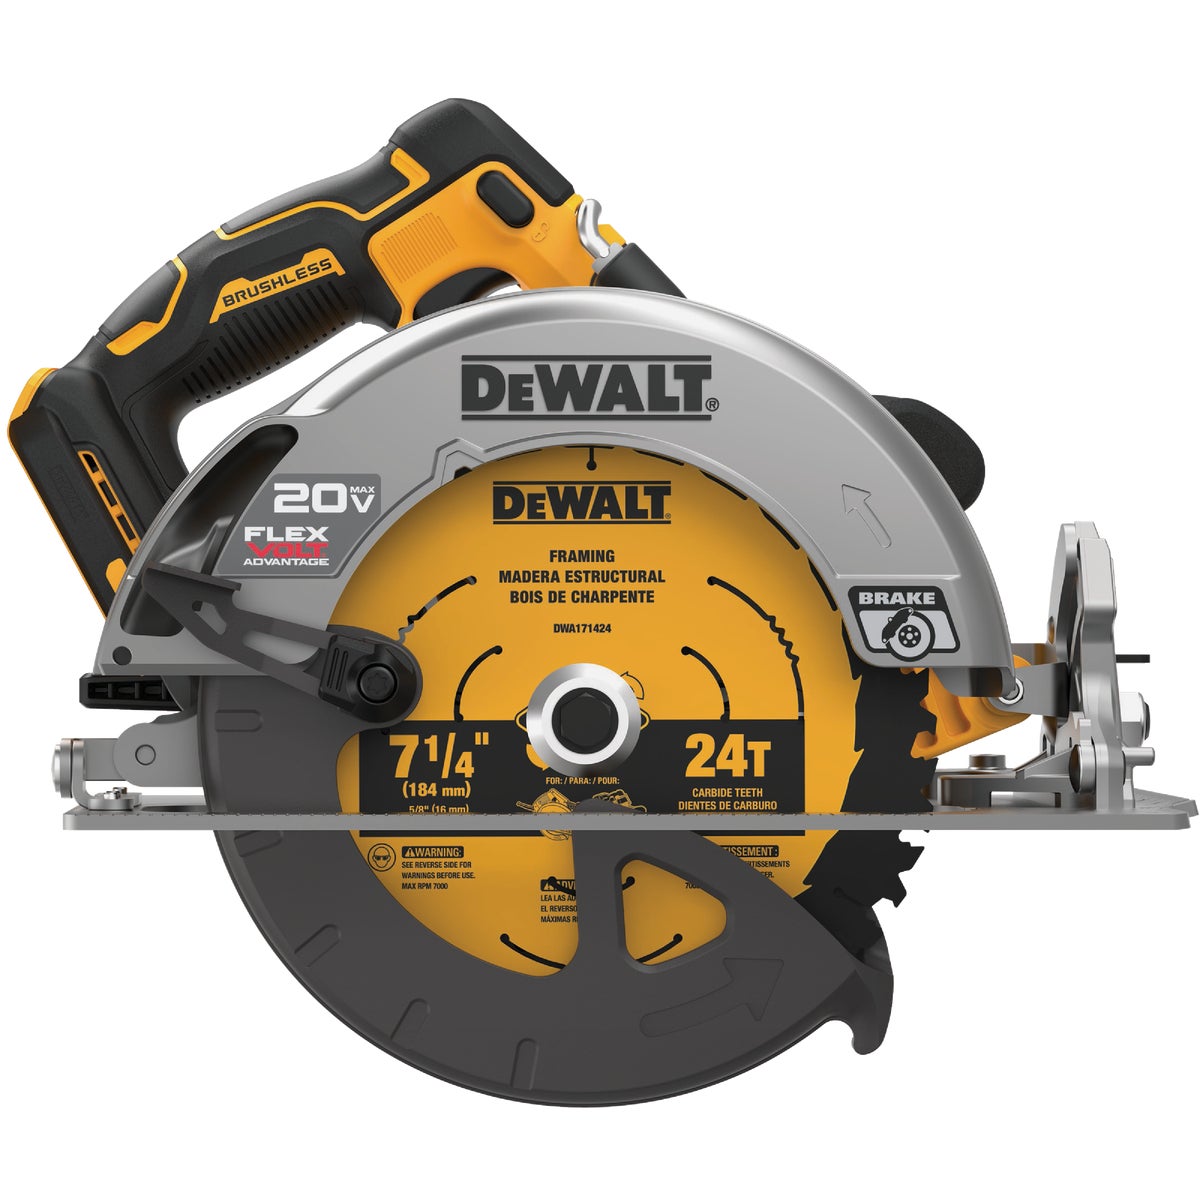 DEWALT 20 Volt MAX 7-1/4 In. Brushless Cordless Circular Saw with FLEXVOLT Advantage (Tool Only)